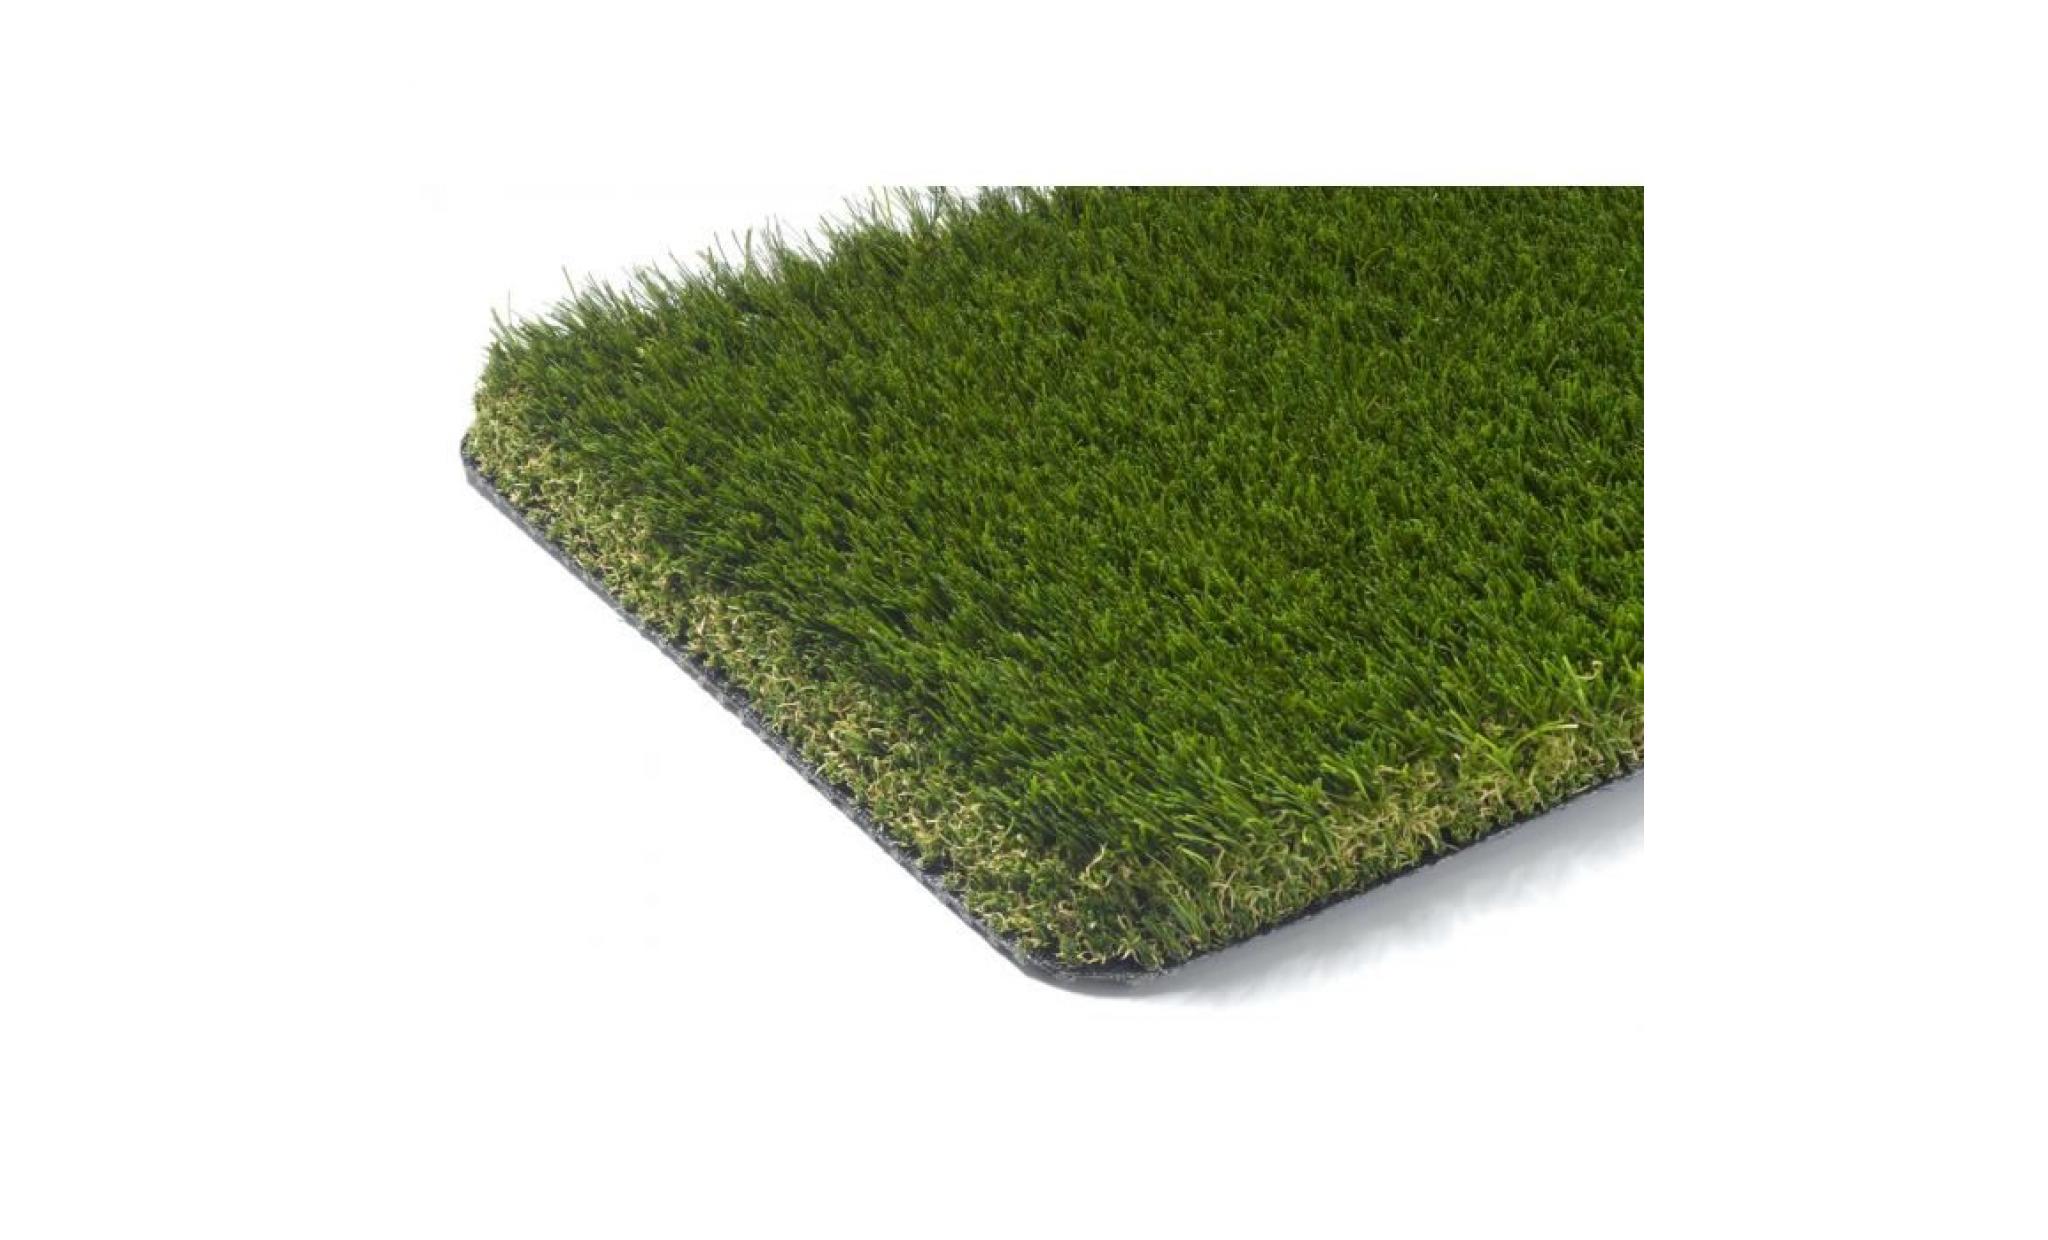 buckingham   tapis type luxe gazon artificiel – pour jardin, terrasse, balcon   vert  [200x450 cm]